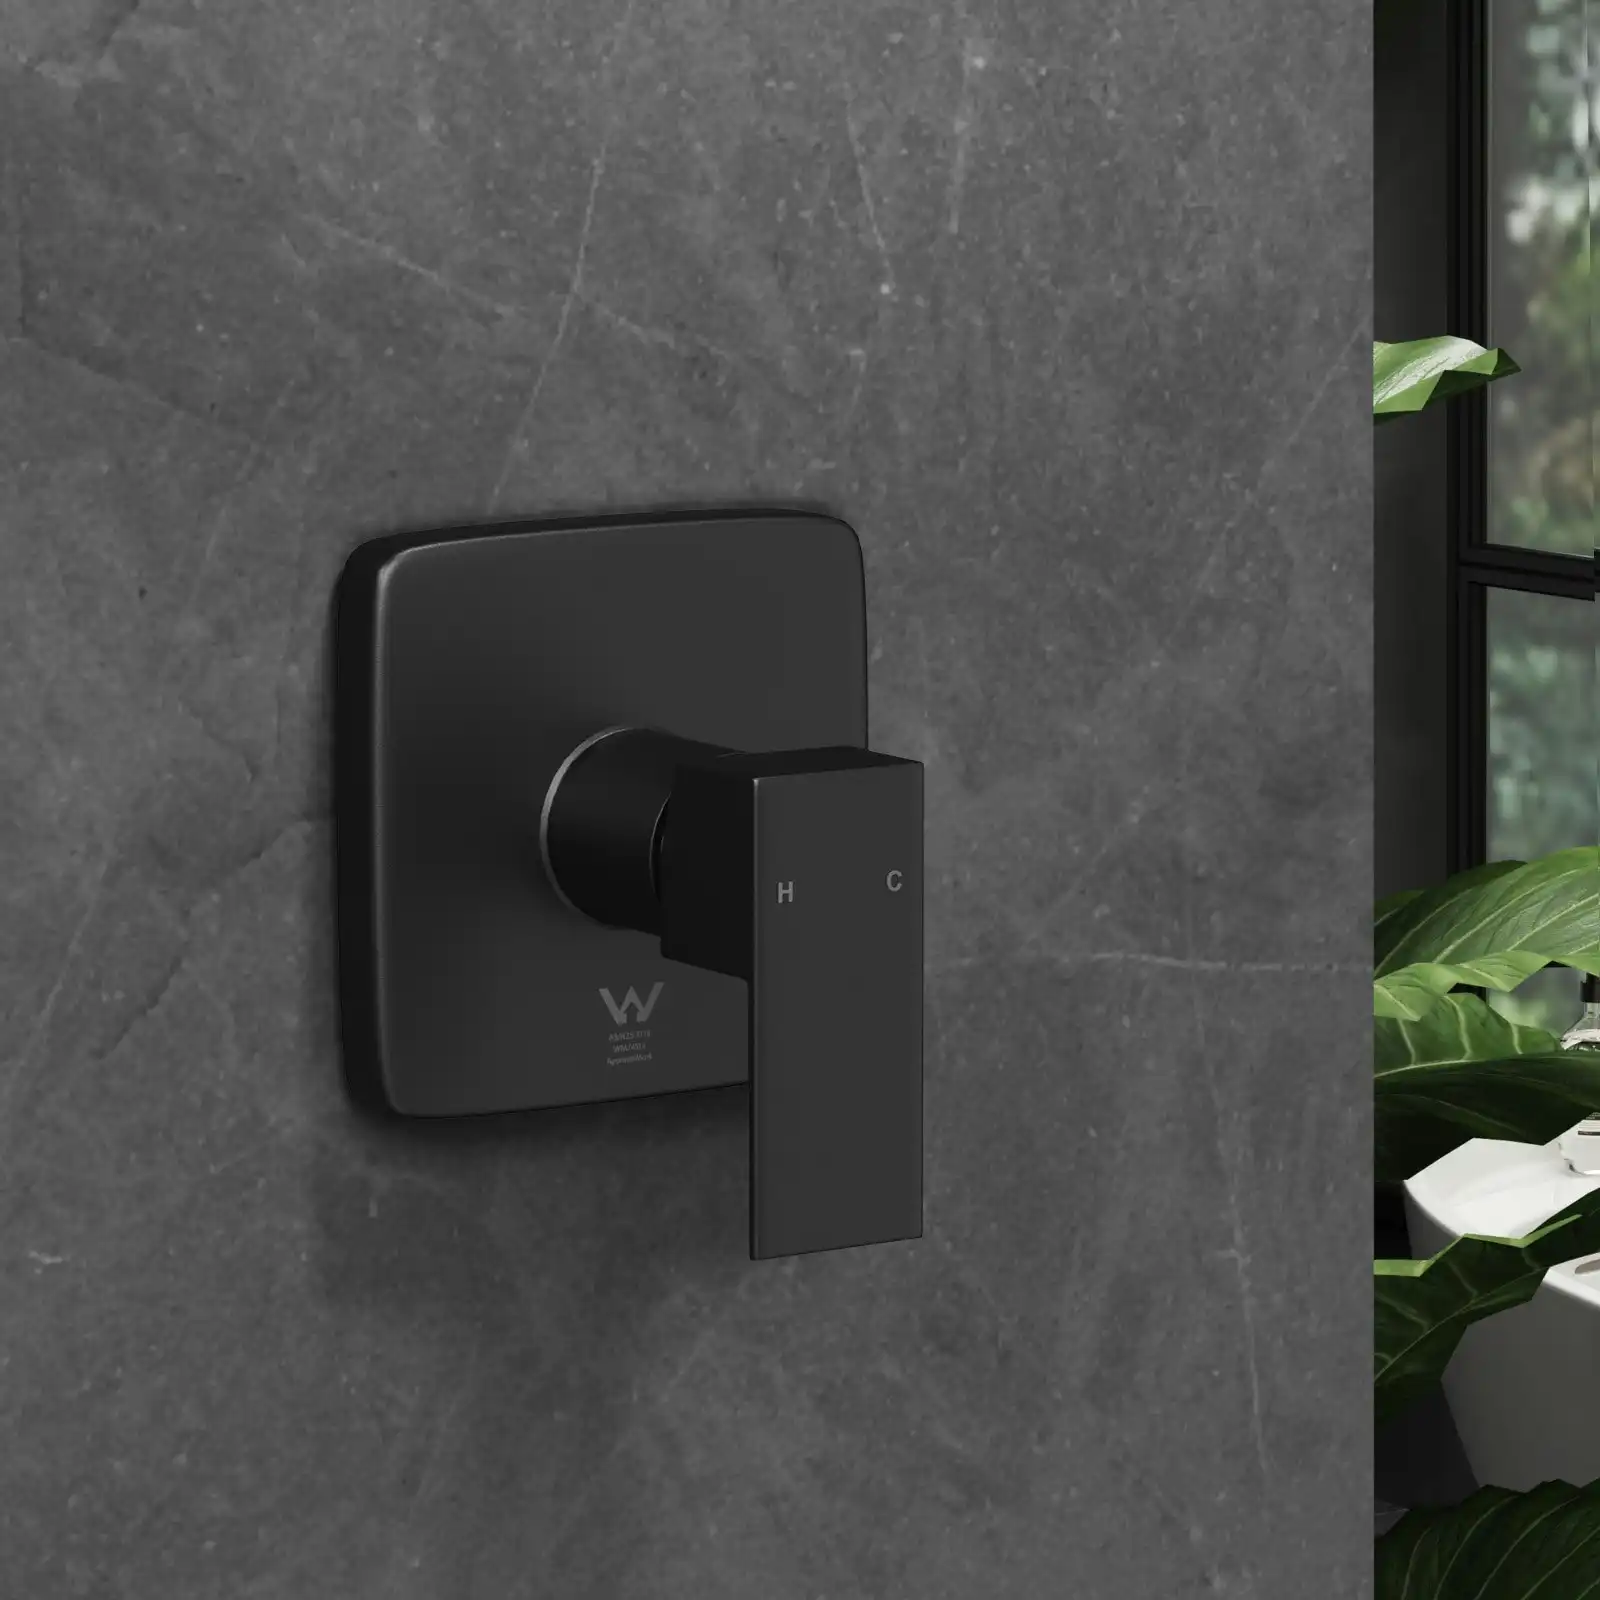 Welba Shower Mixer Tap Bathroom Wall Tapware Brass Tapware Square Black